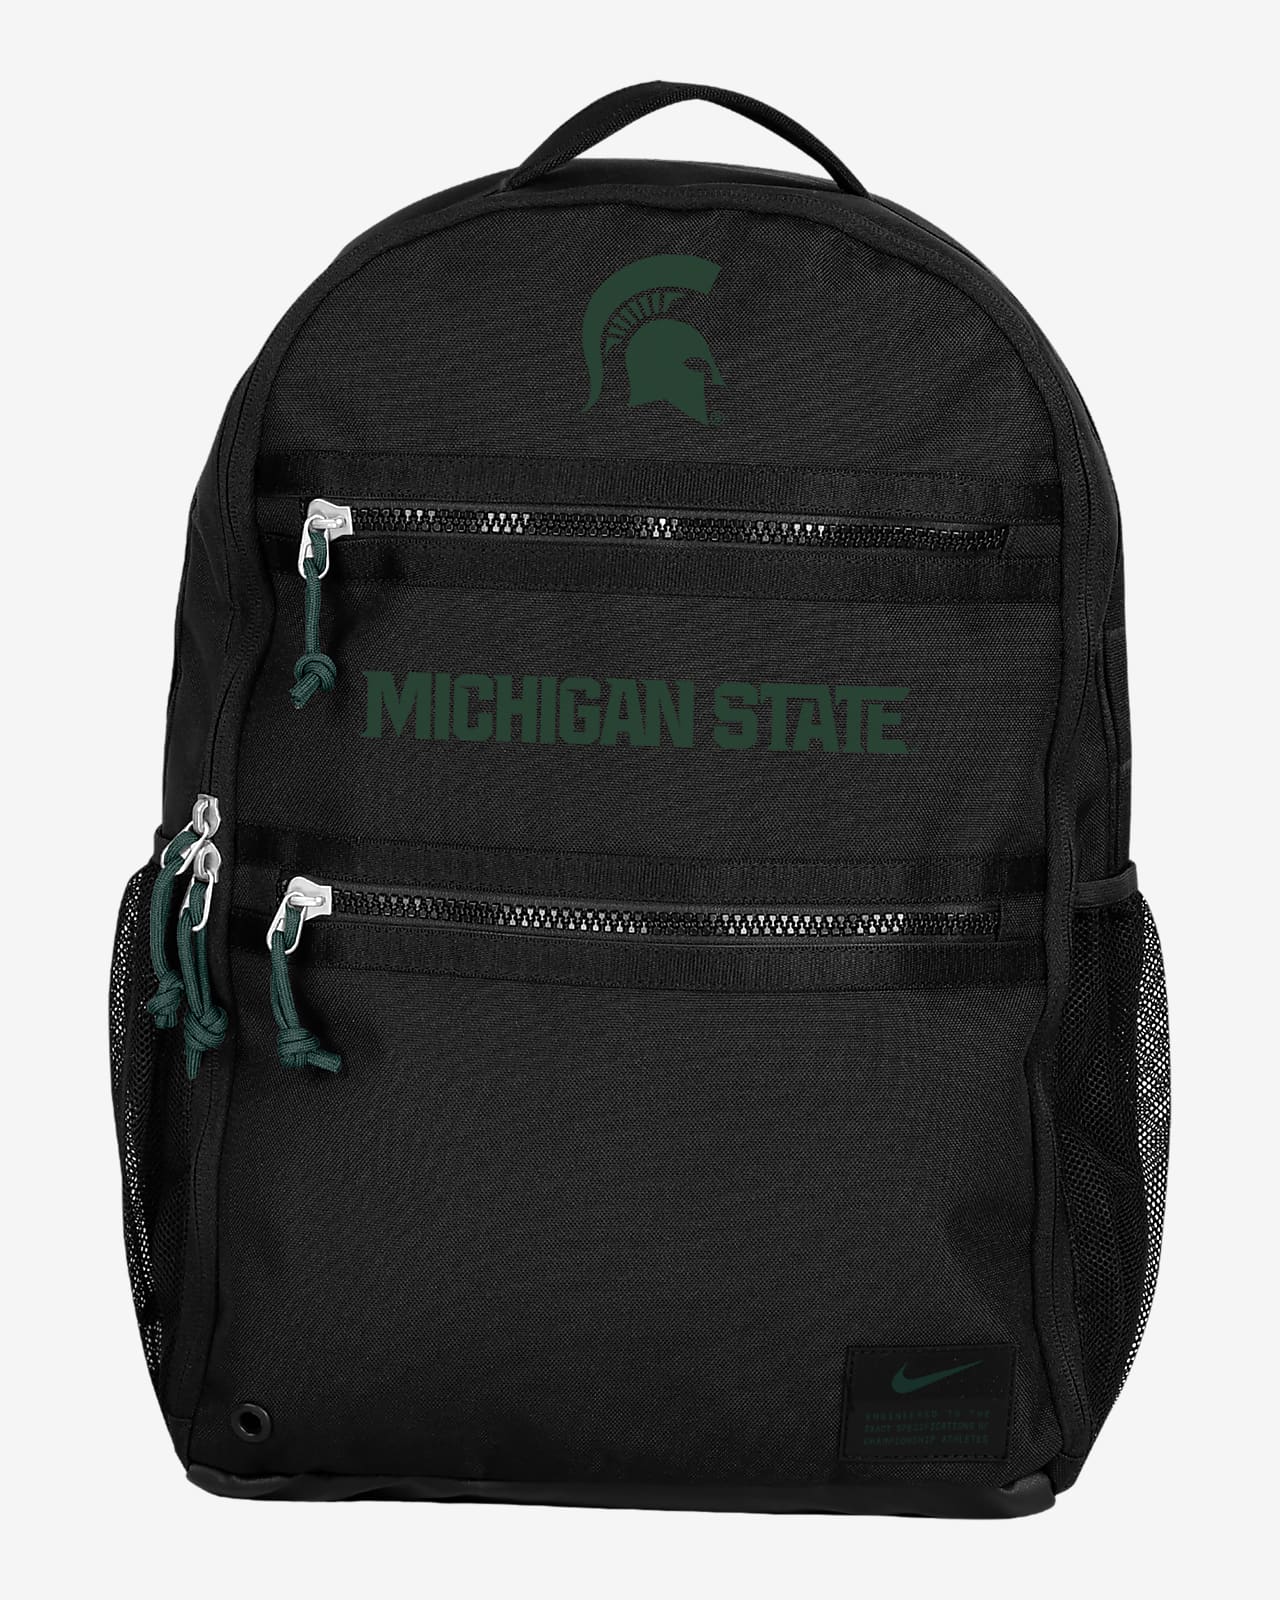 Nike College (Michigan State) Backpack